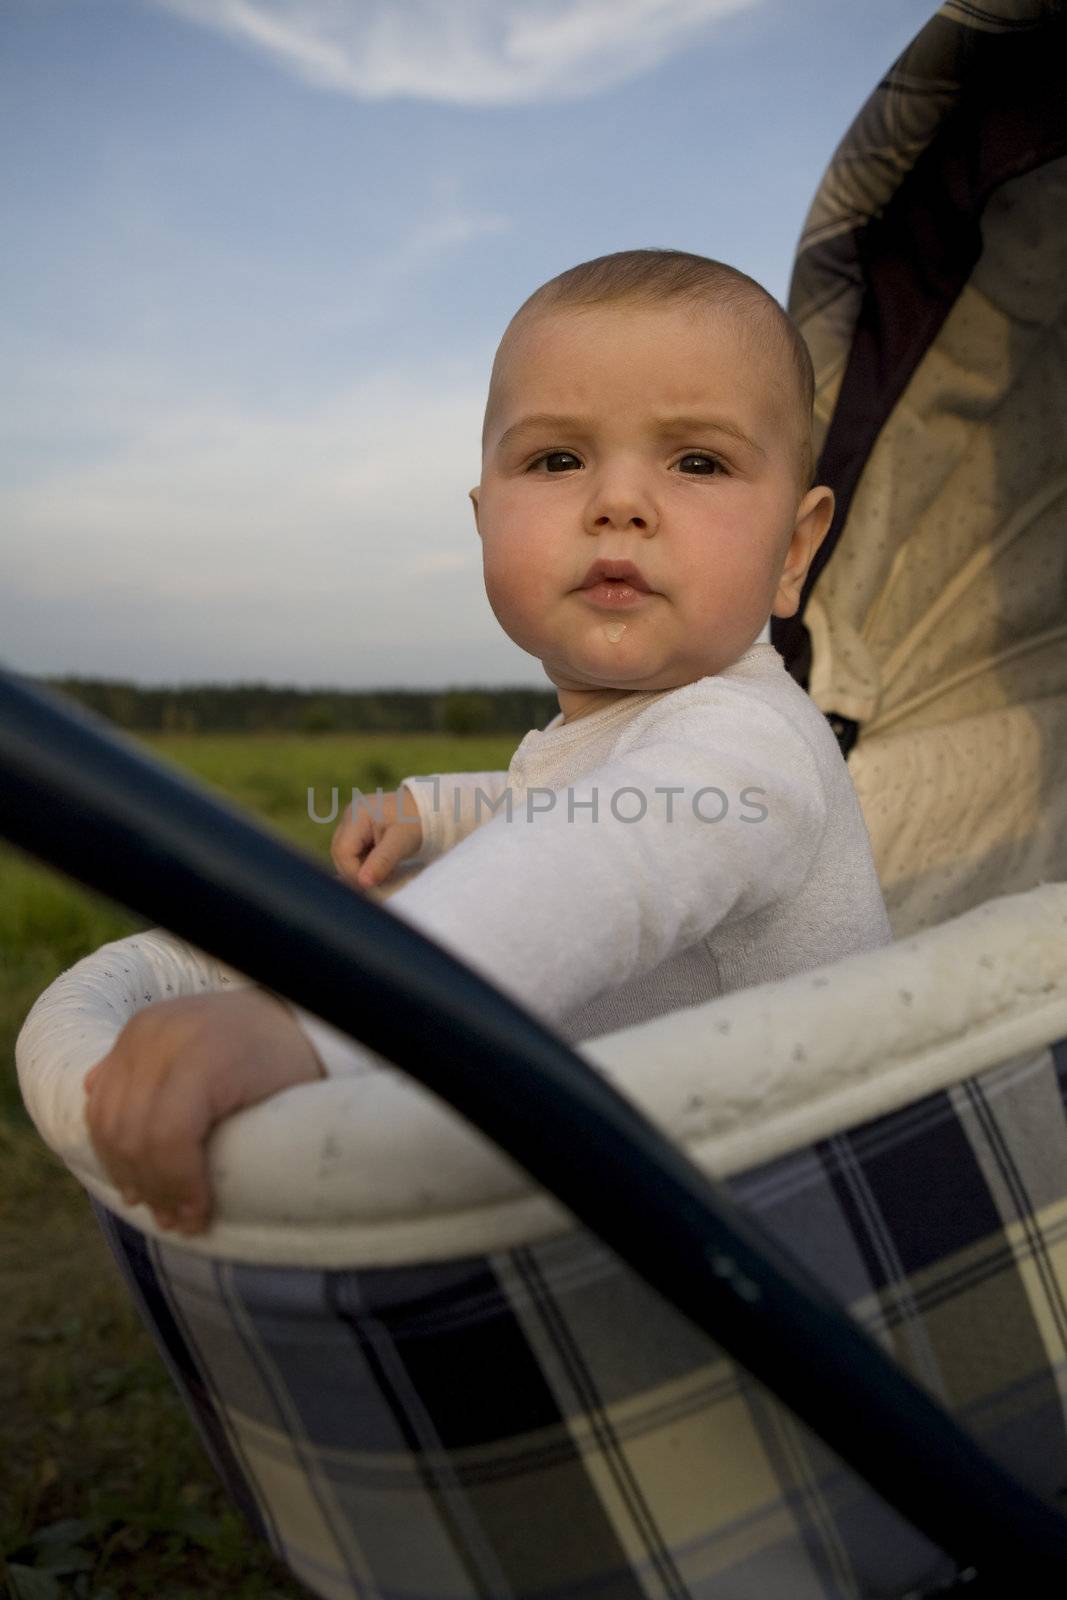 Baby in buggy. Summer time. Outdoor by elenarostunova